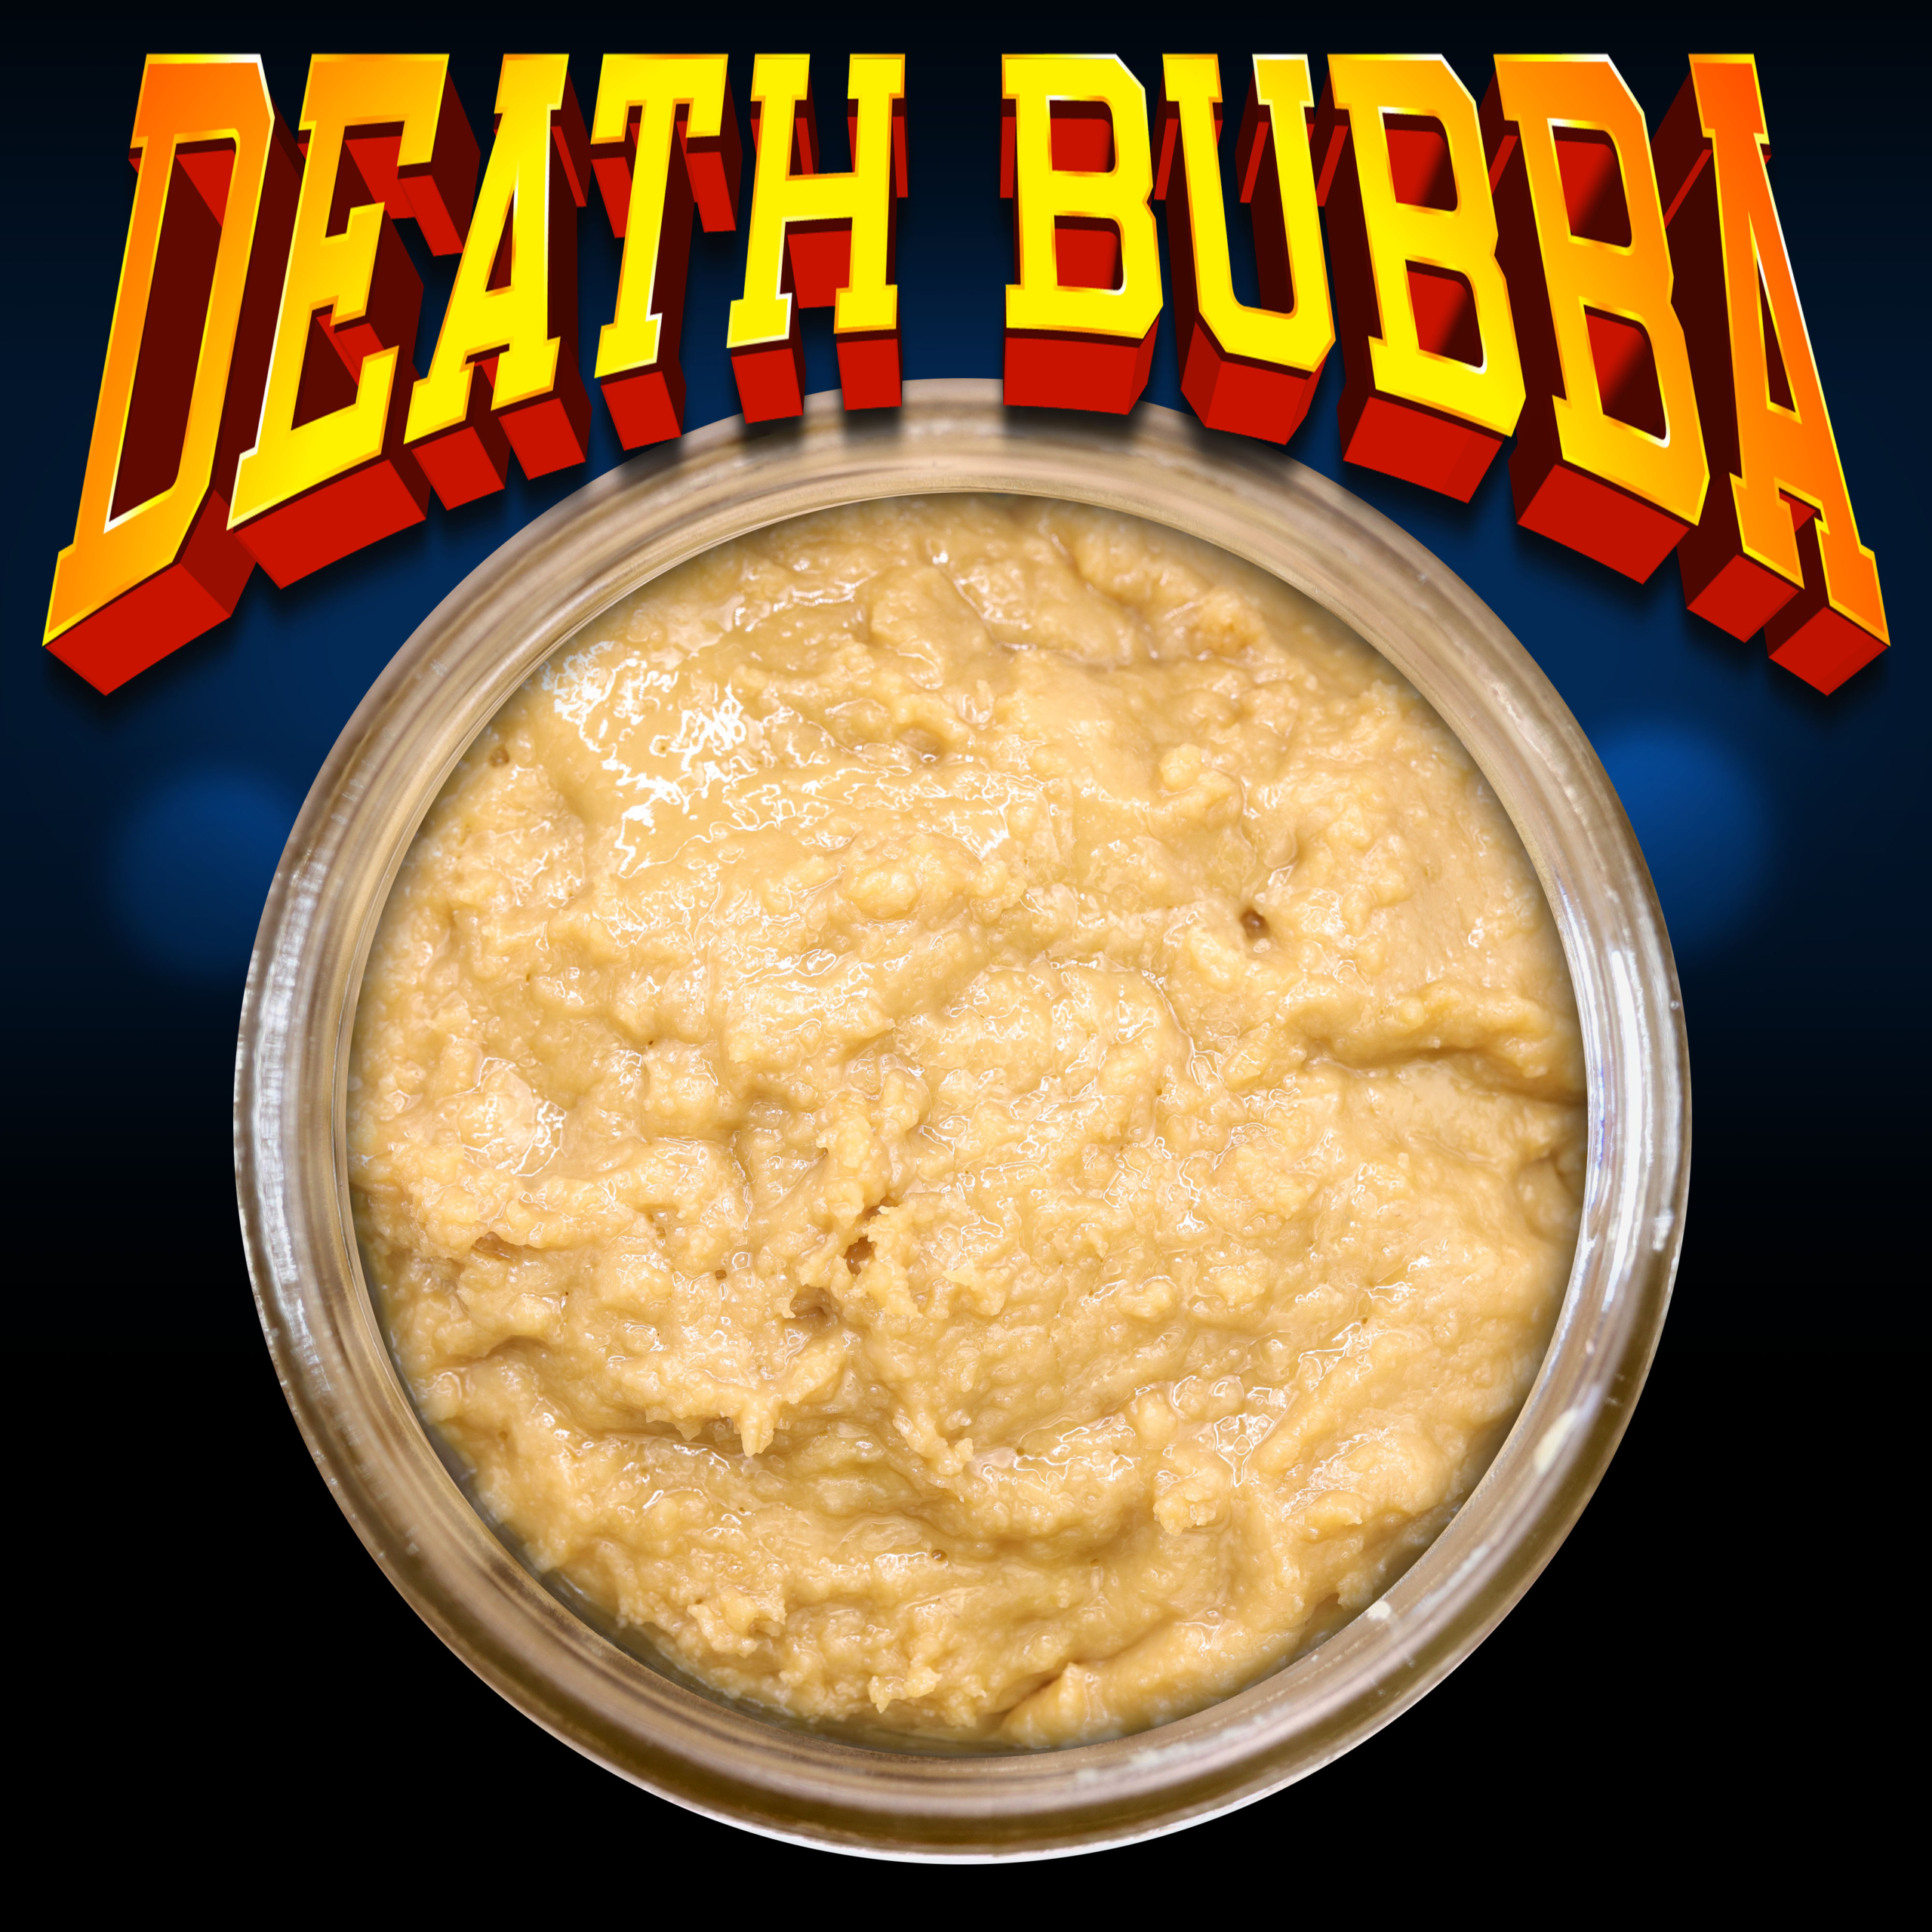 Death Bubba Thumbnail